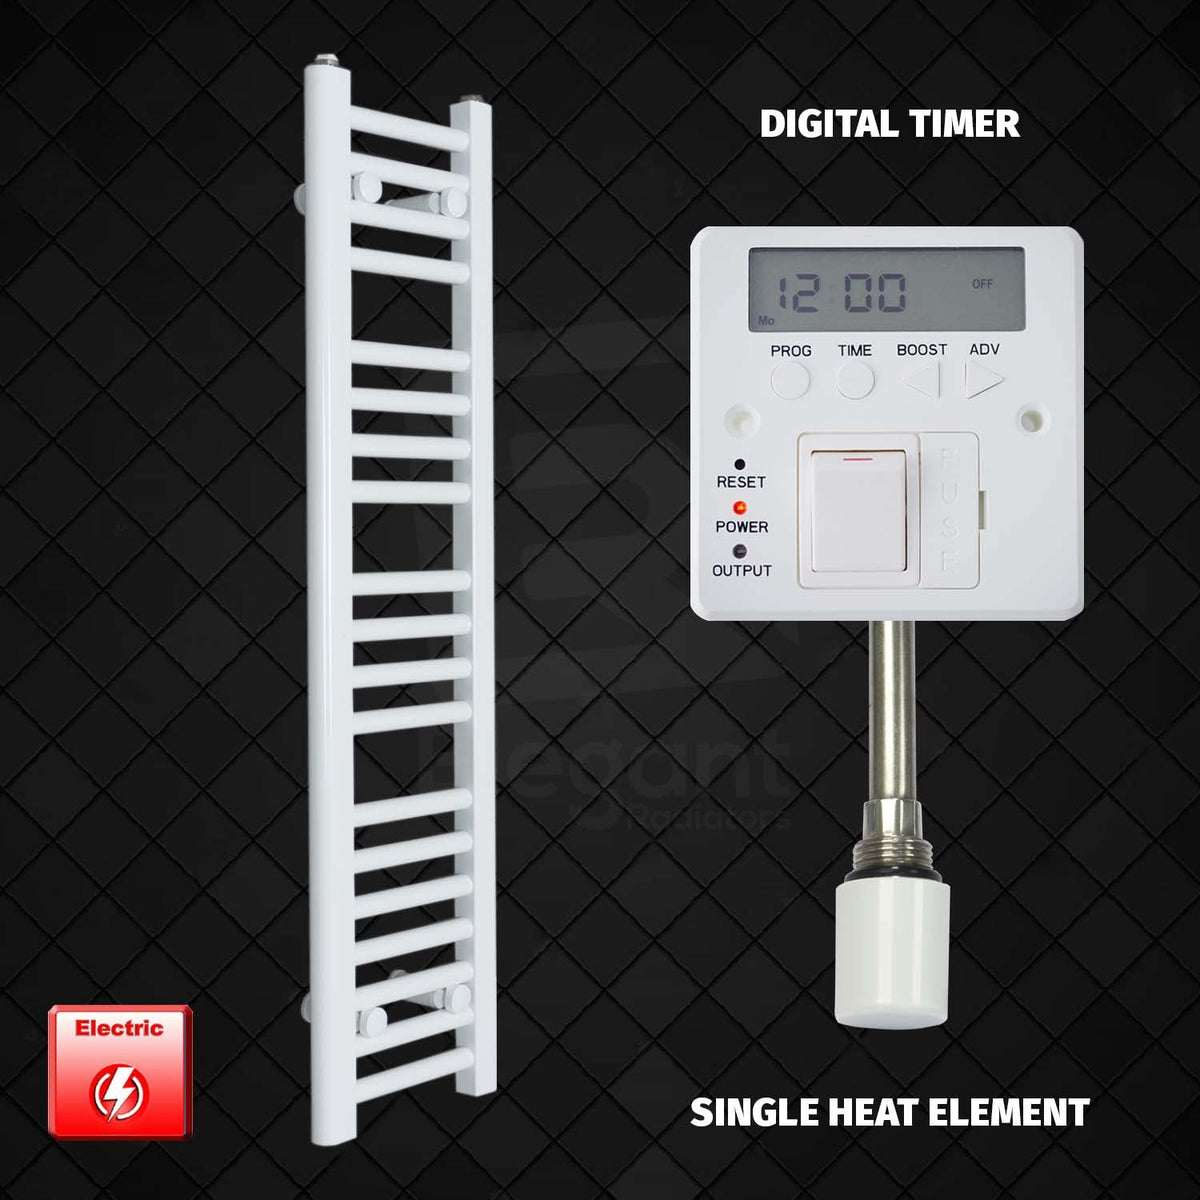 1000 mm High 200 mm Wide Pre-Filled Electric Towel Rail White HTR Single Heat Element Digital Timer